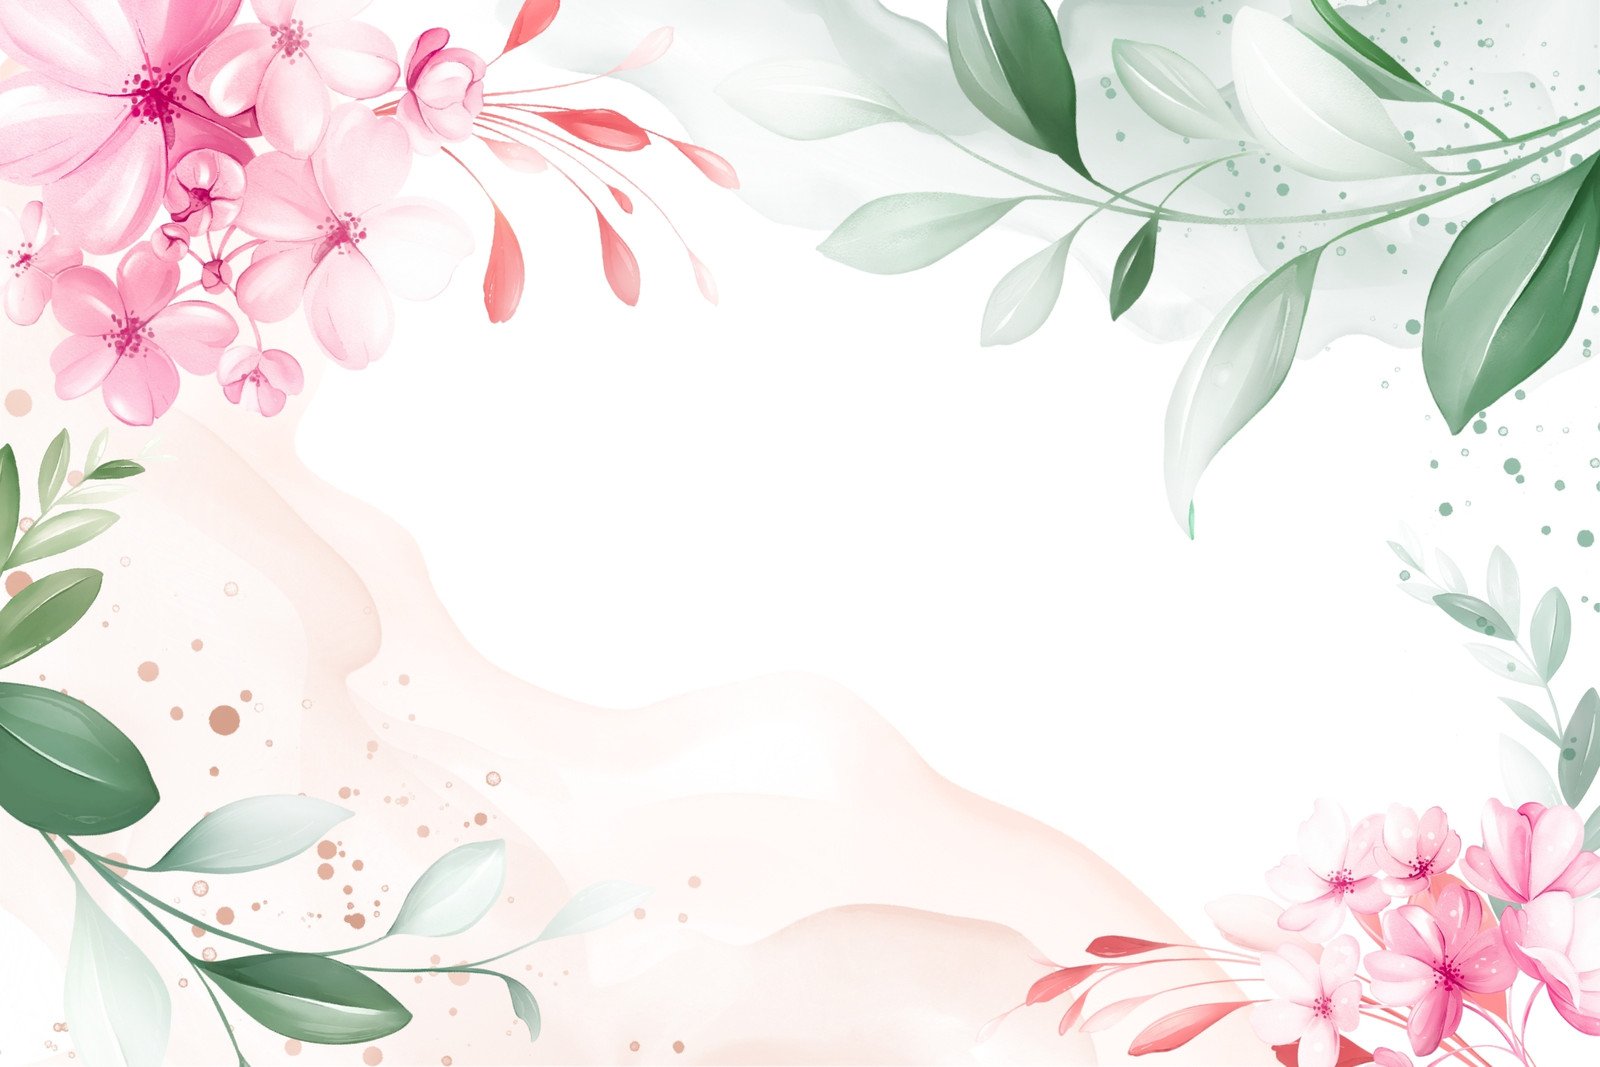 Free and customizable floral desktop wallpaper templates